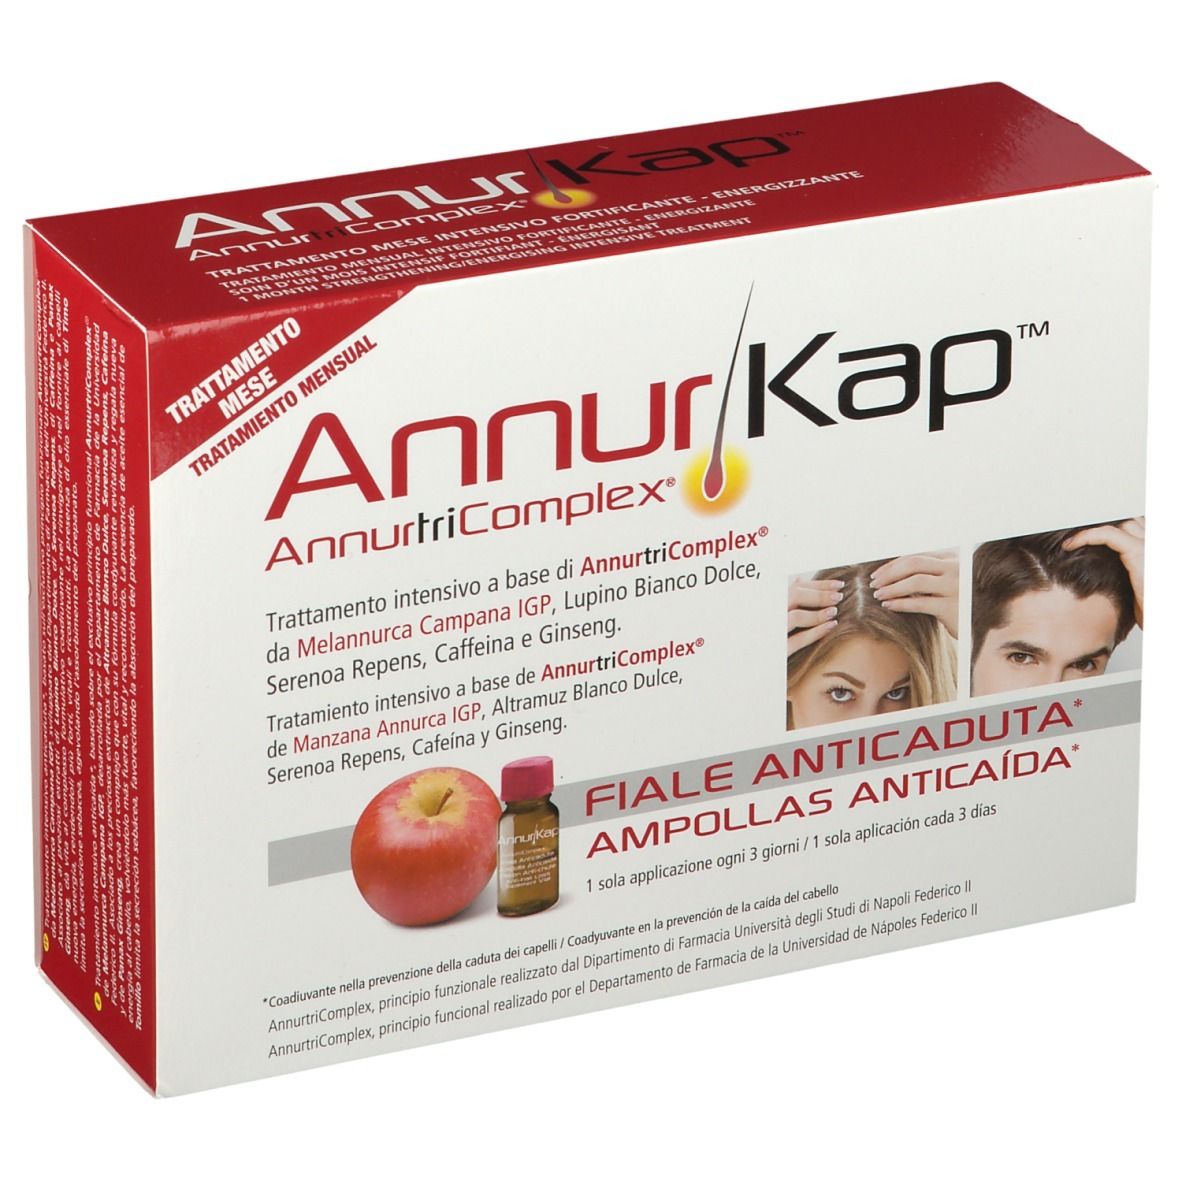 Image of AnnurKap™ Fiale Anticaduta